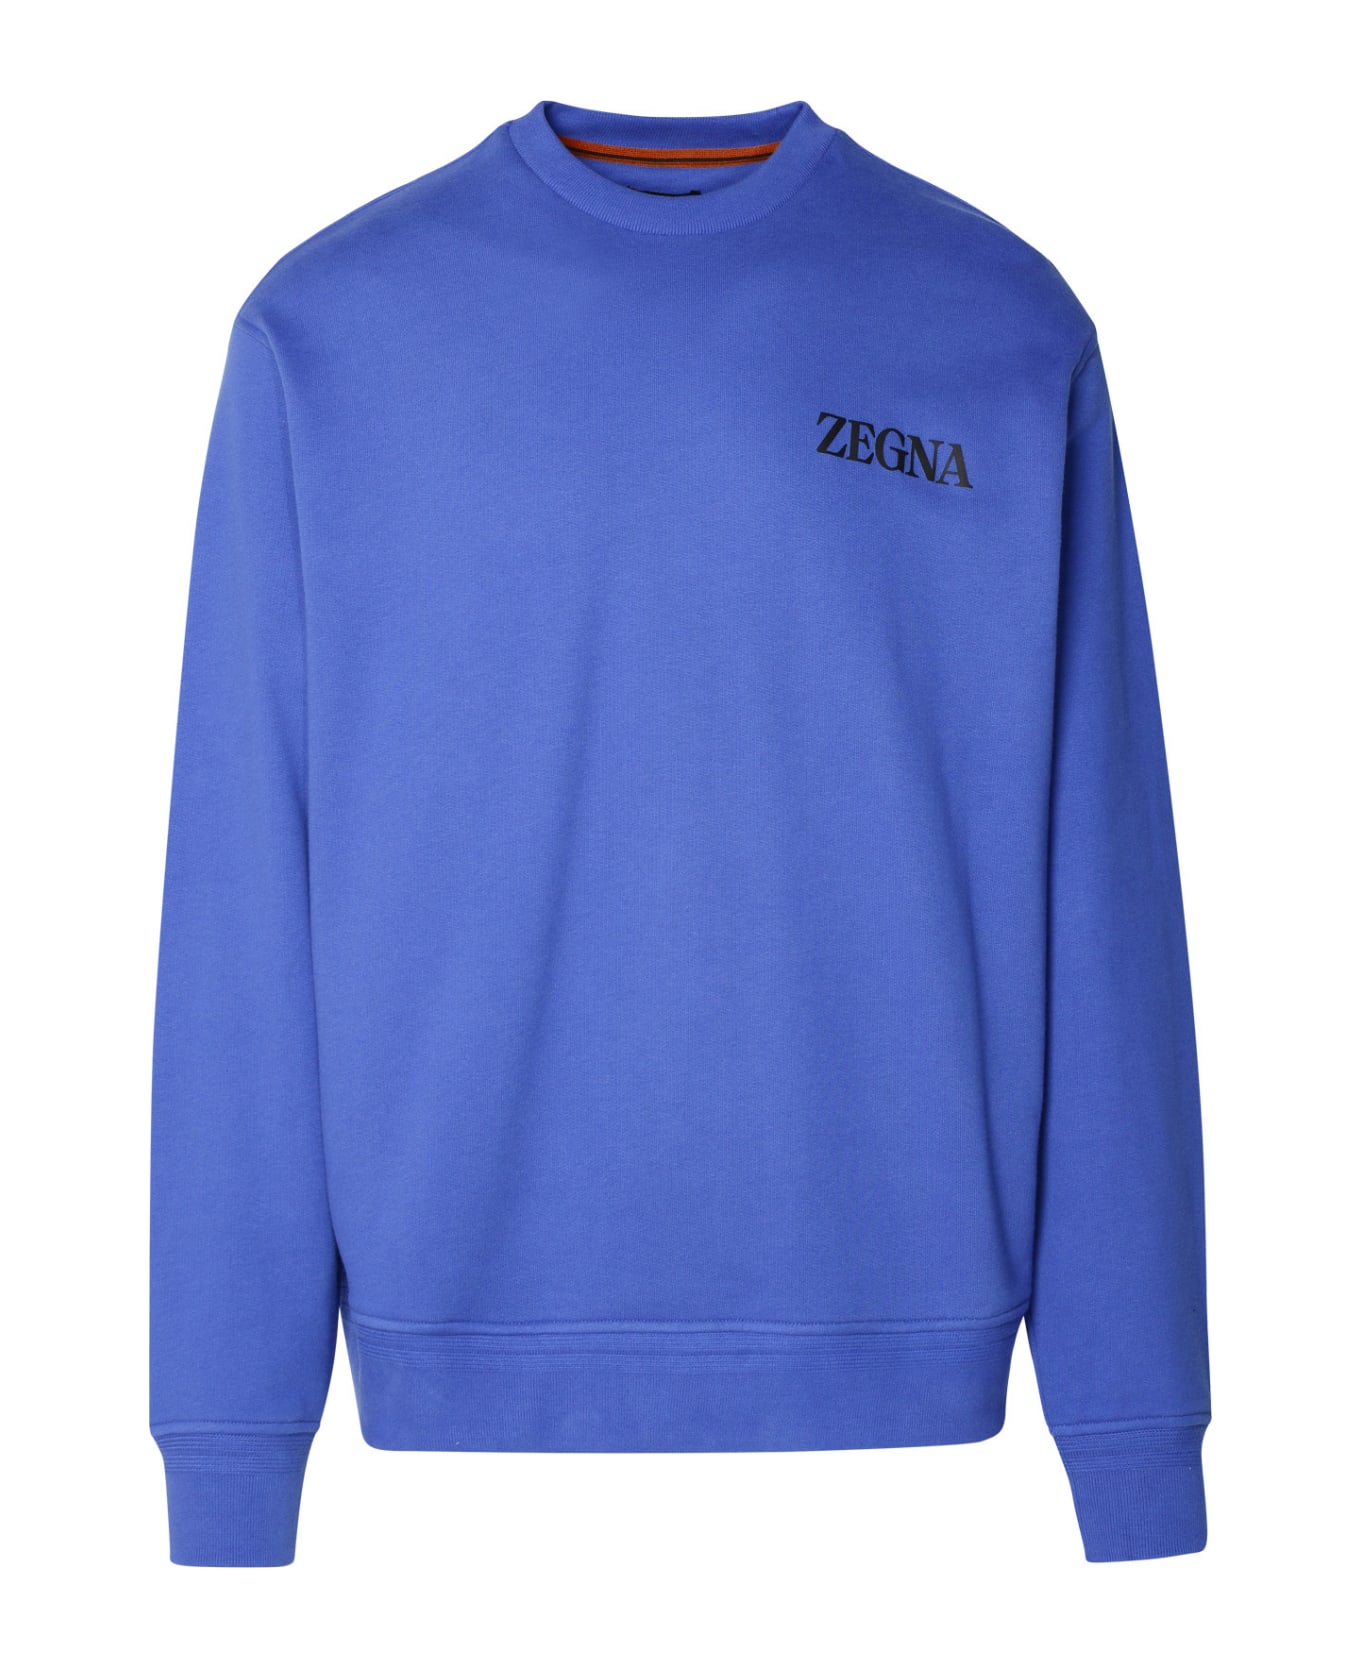 Zegna Blue Cotton Sweatshirt - Blue